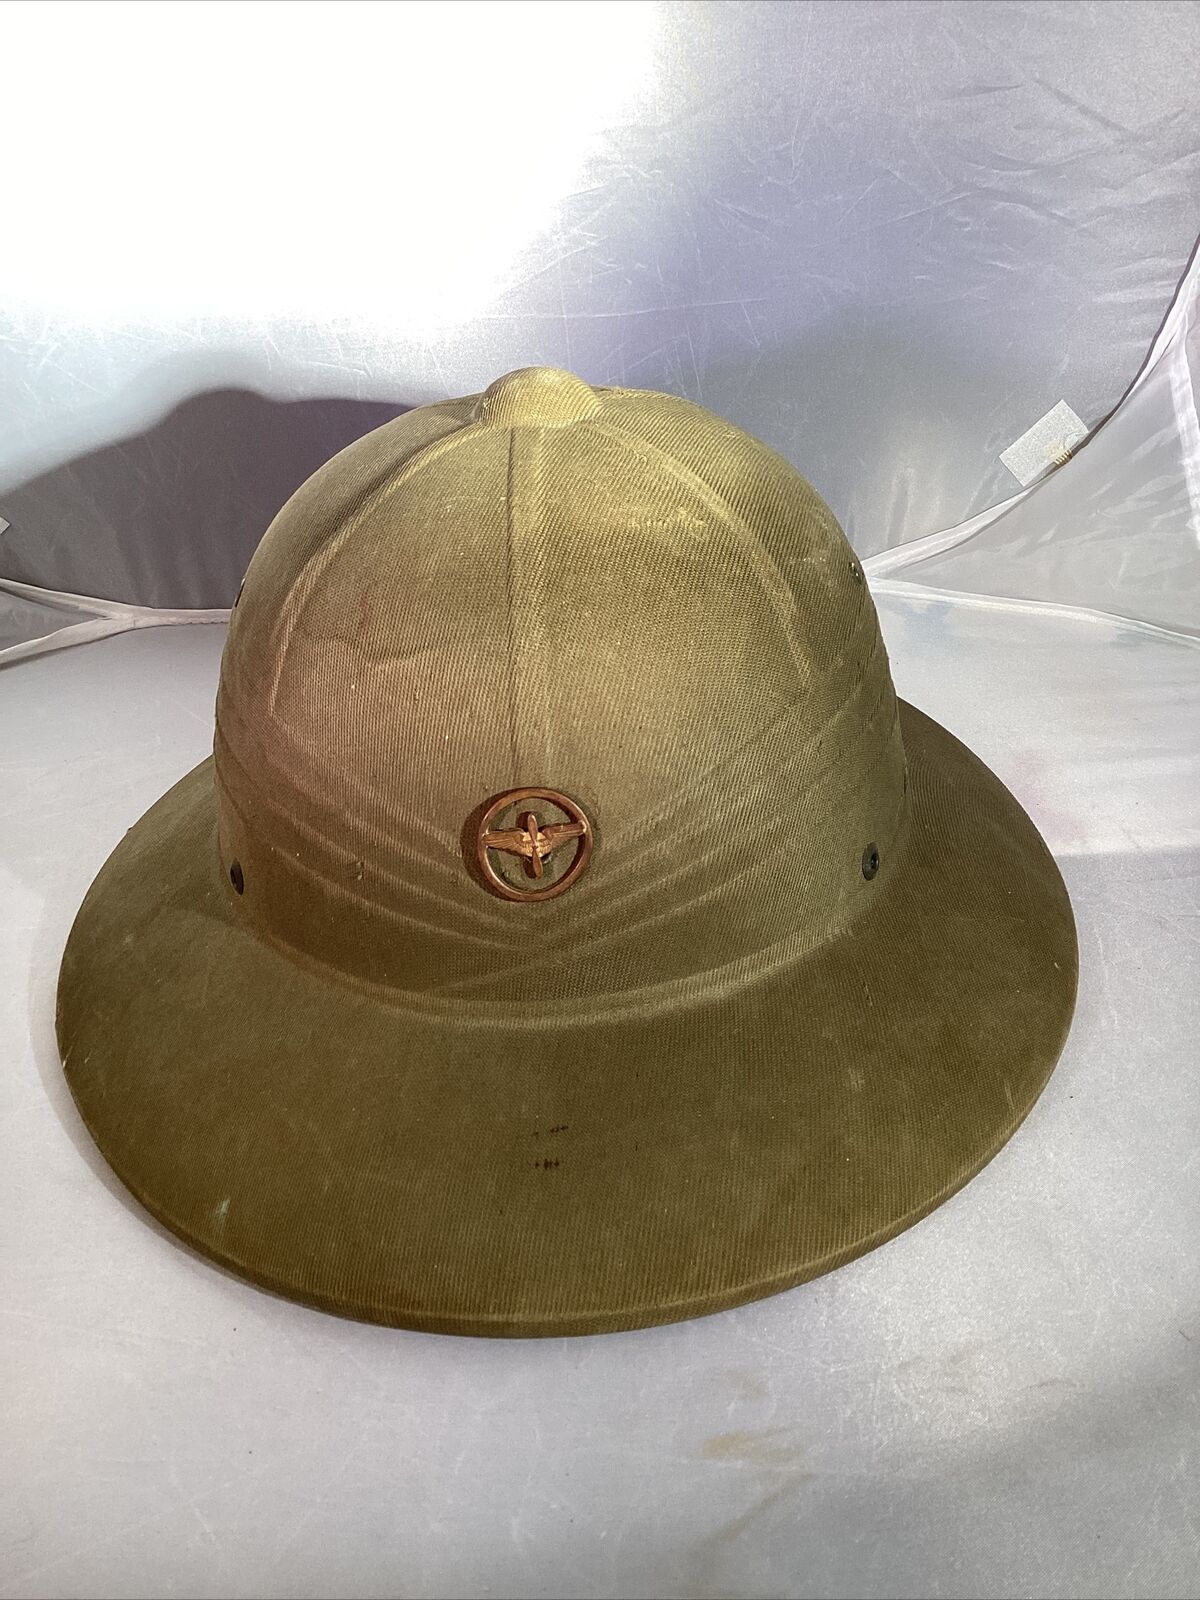 Vintage WWII Hawley US Army Aviation Pith Sun Helmet Dated Jan 29, 1944